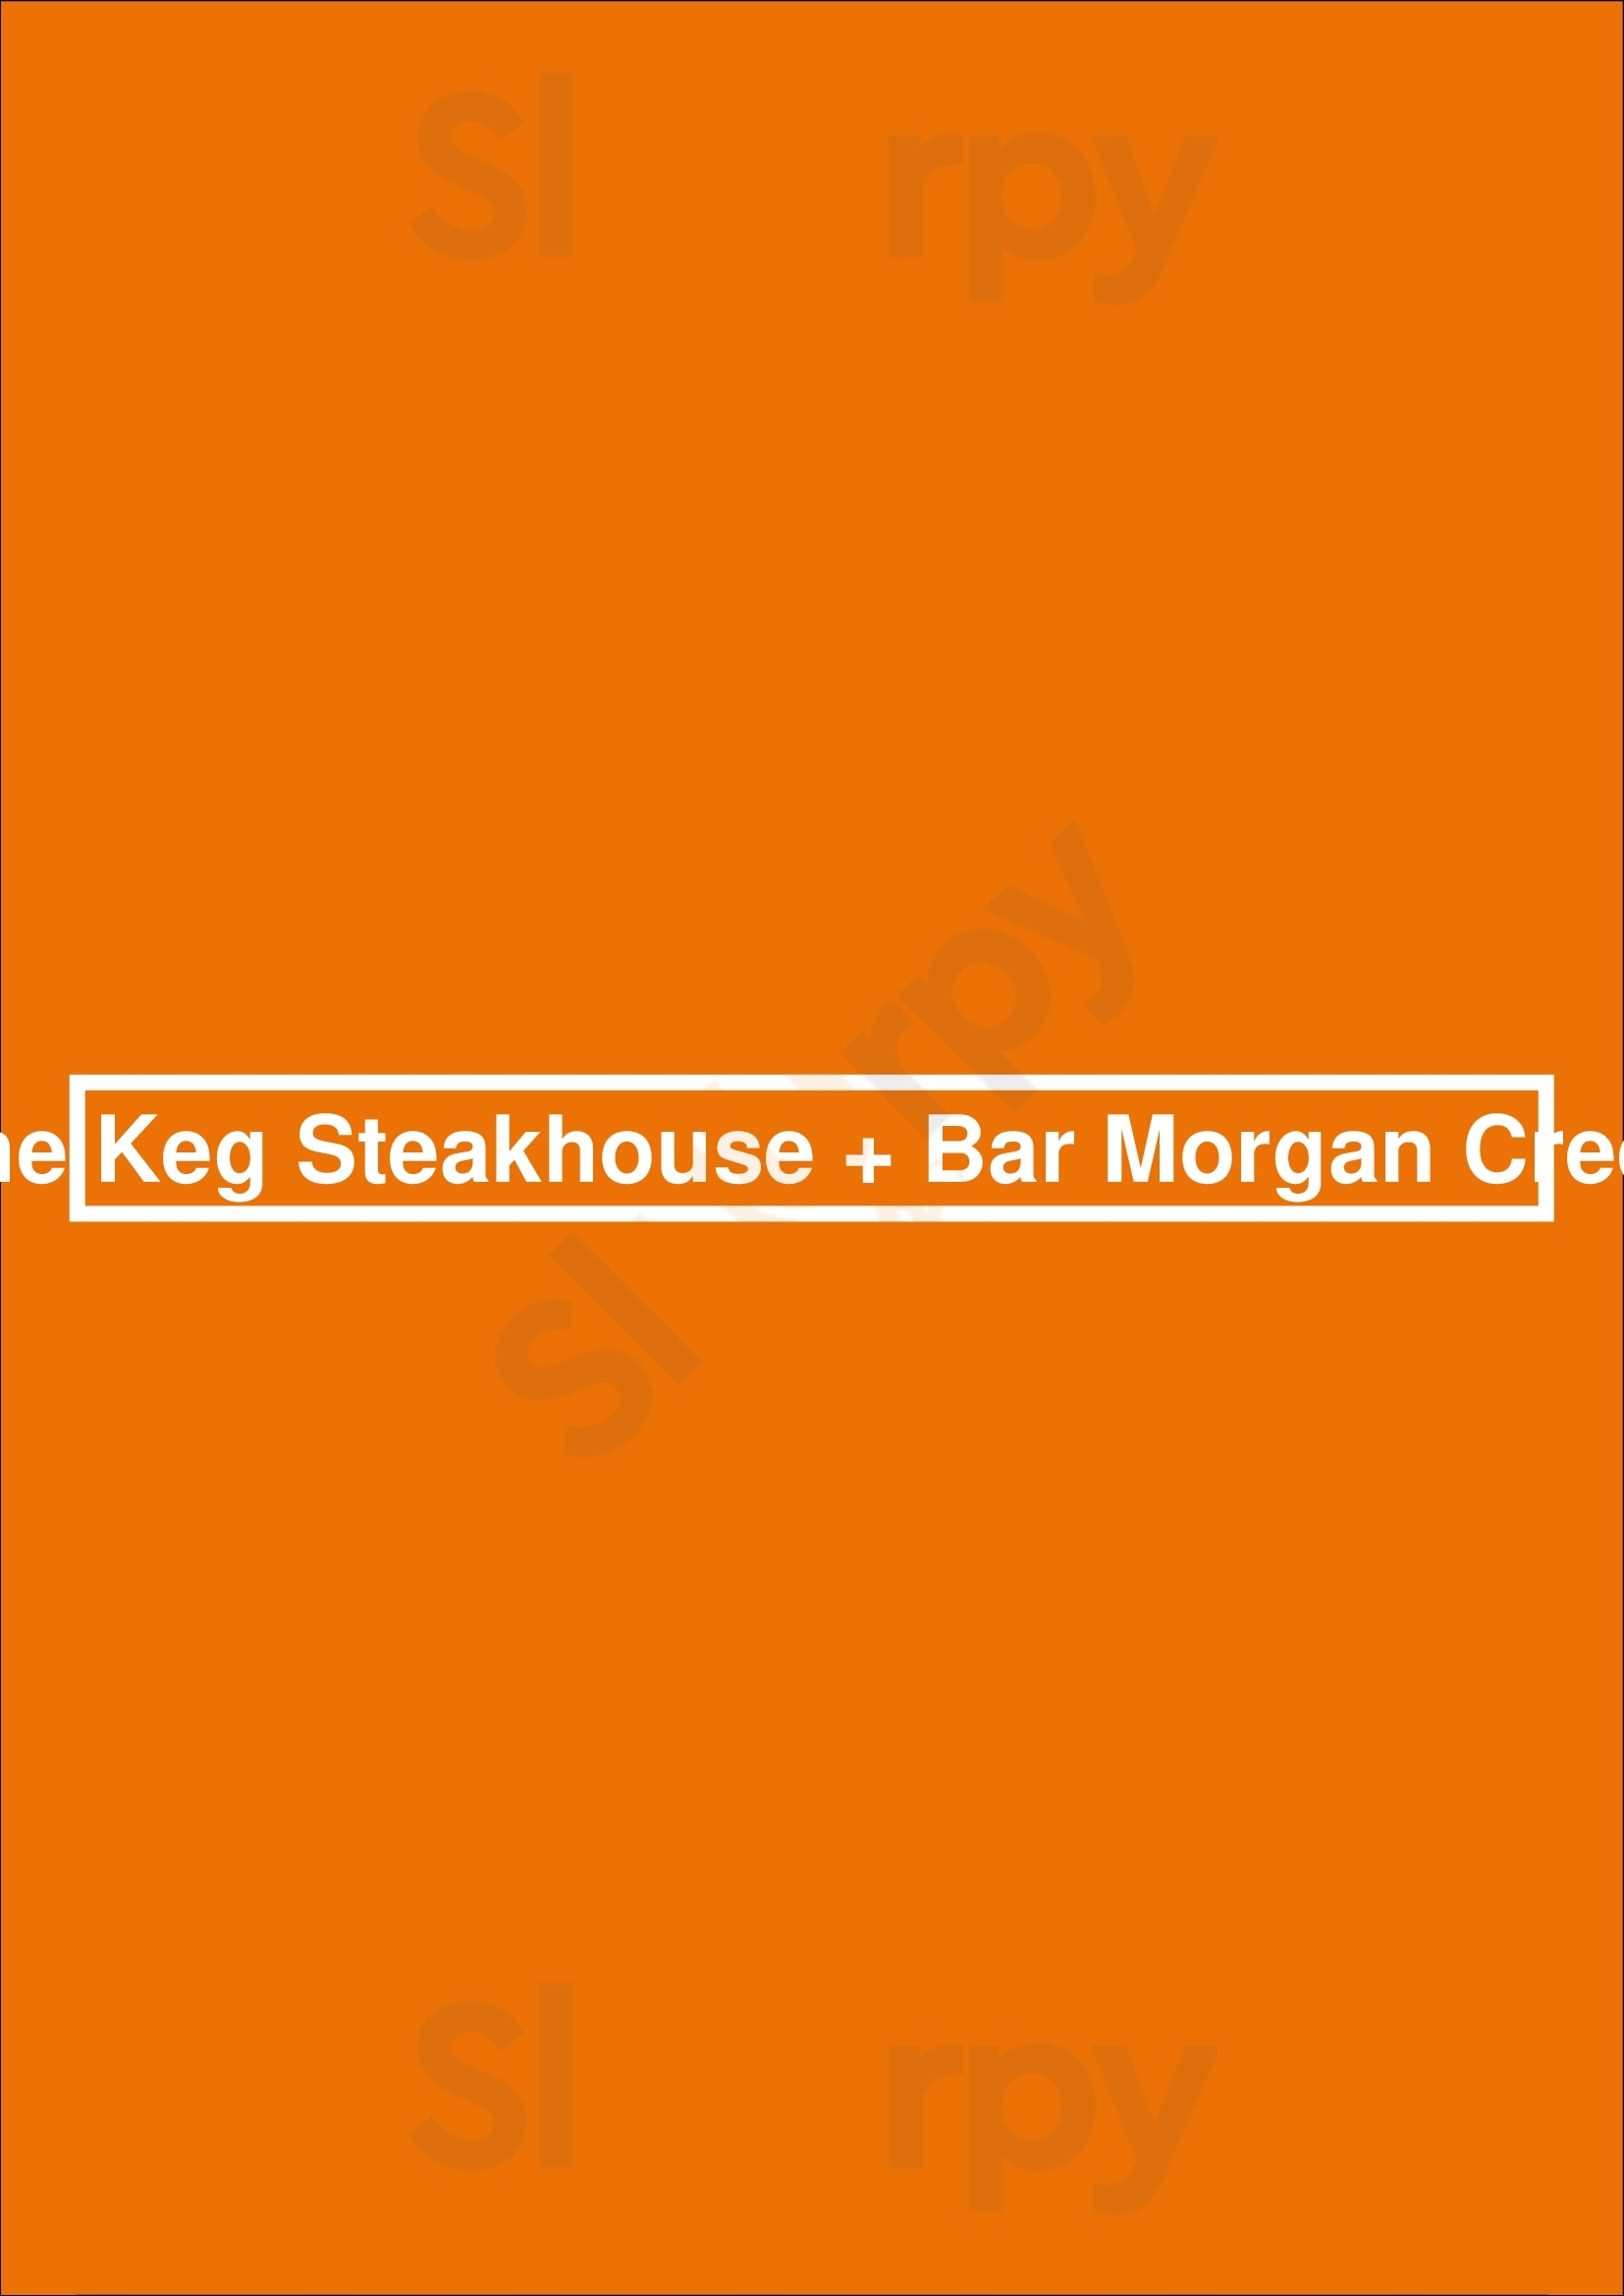 The Keg Steakhouse + Bar - Morgan Creek Surrey Menu - 1